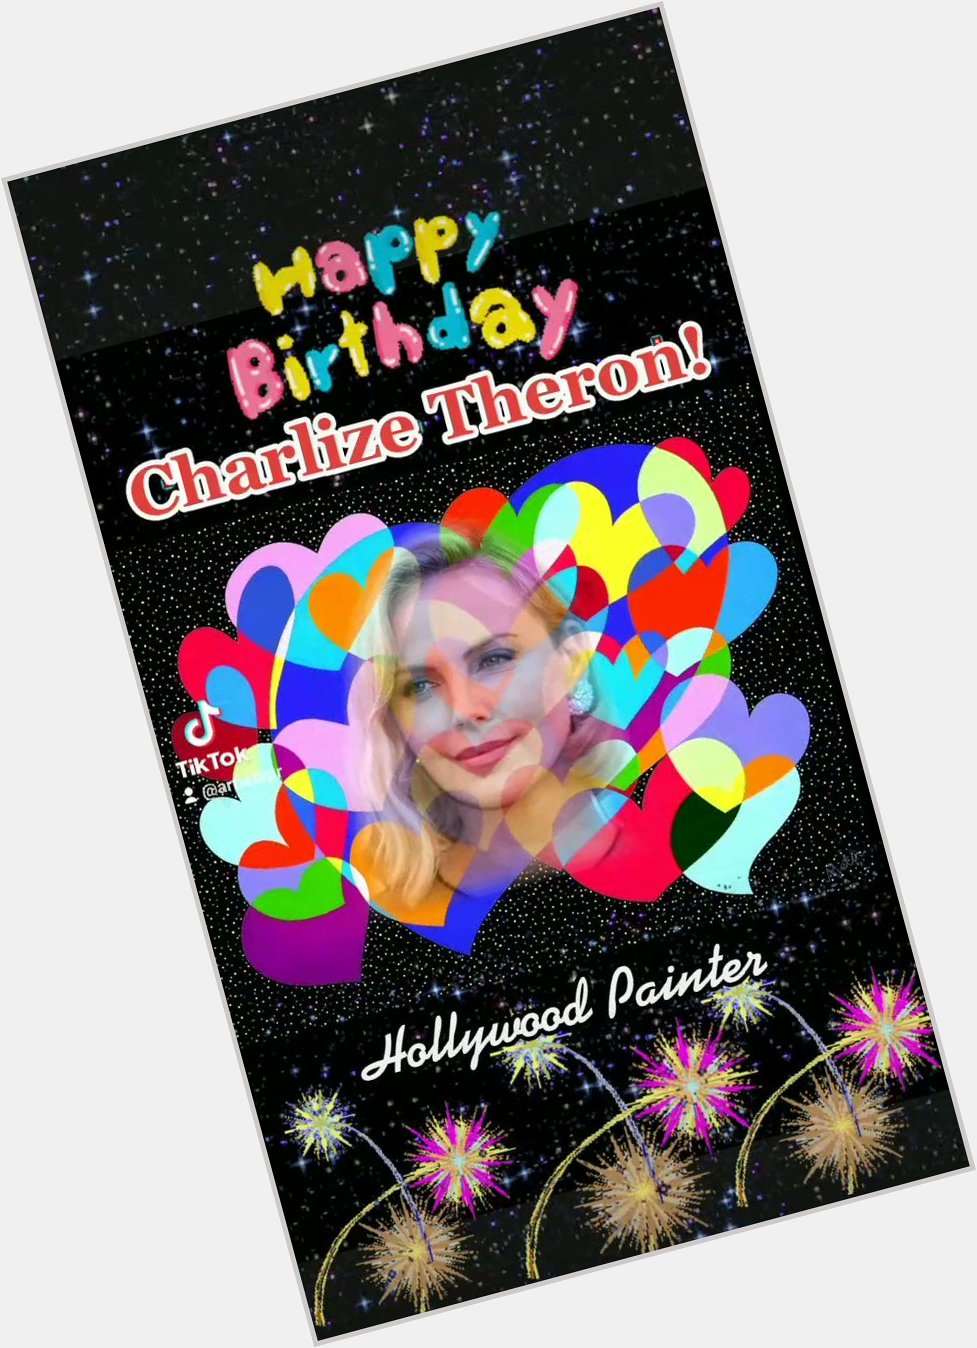  Happy Birthday Charlize Theron!
Hollywood Painter Metin Bereketli   